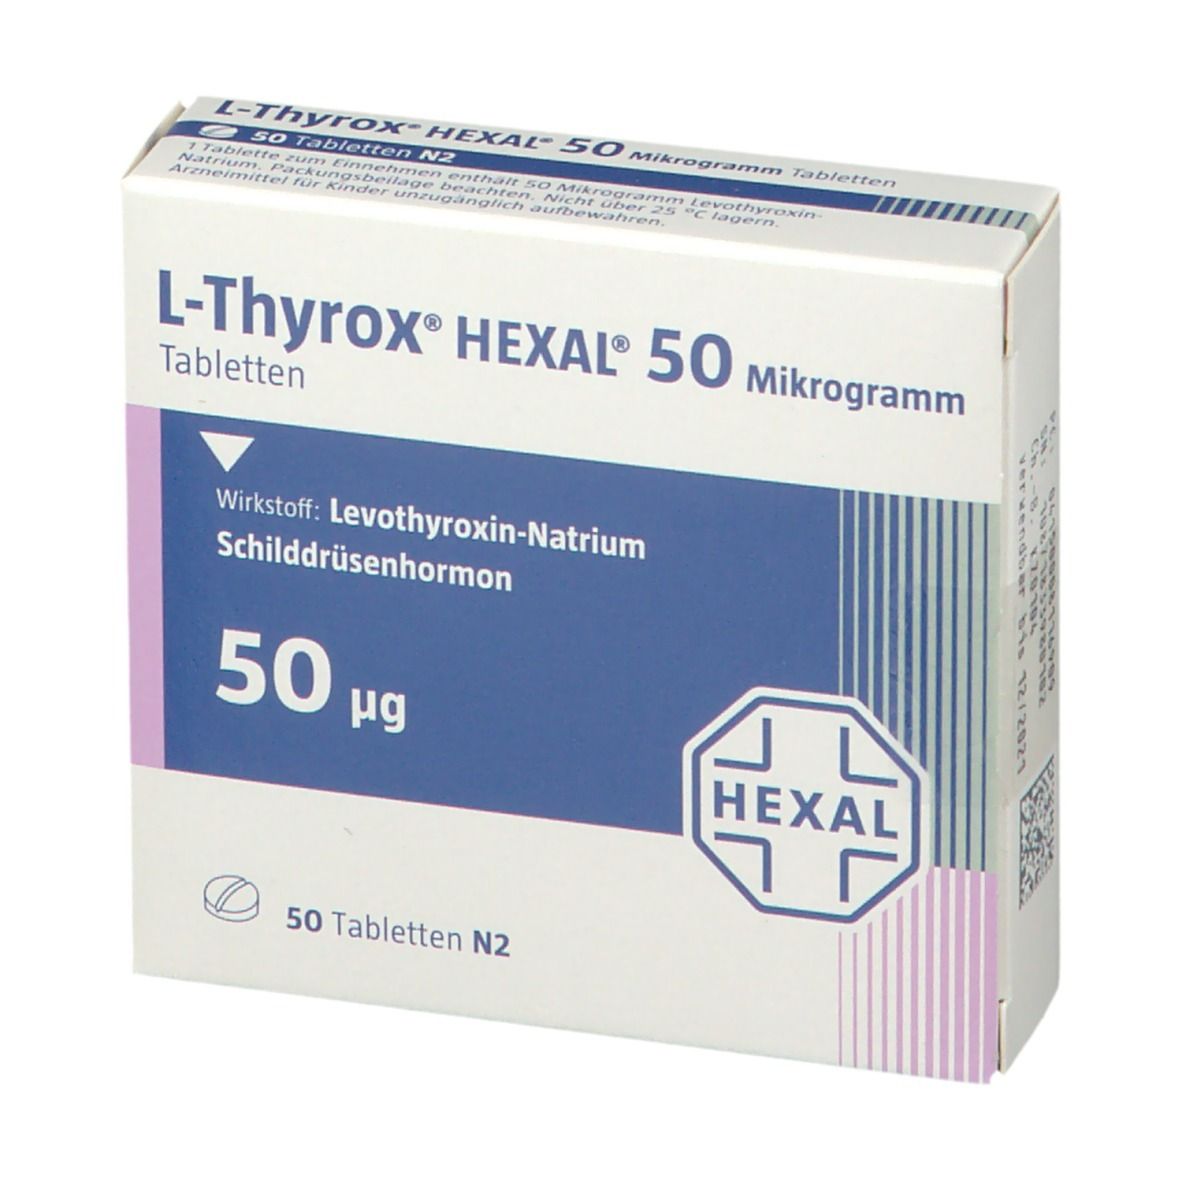 Сотой гексал. L тирокс евро 125 мг. Thyrox 50. Гексал таблетки фотография. Эстрамон 50 Hexal АГ.